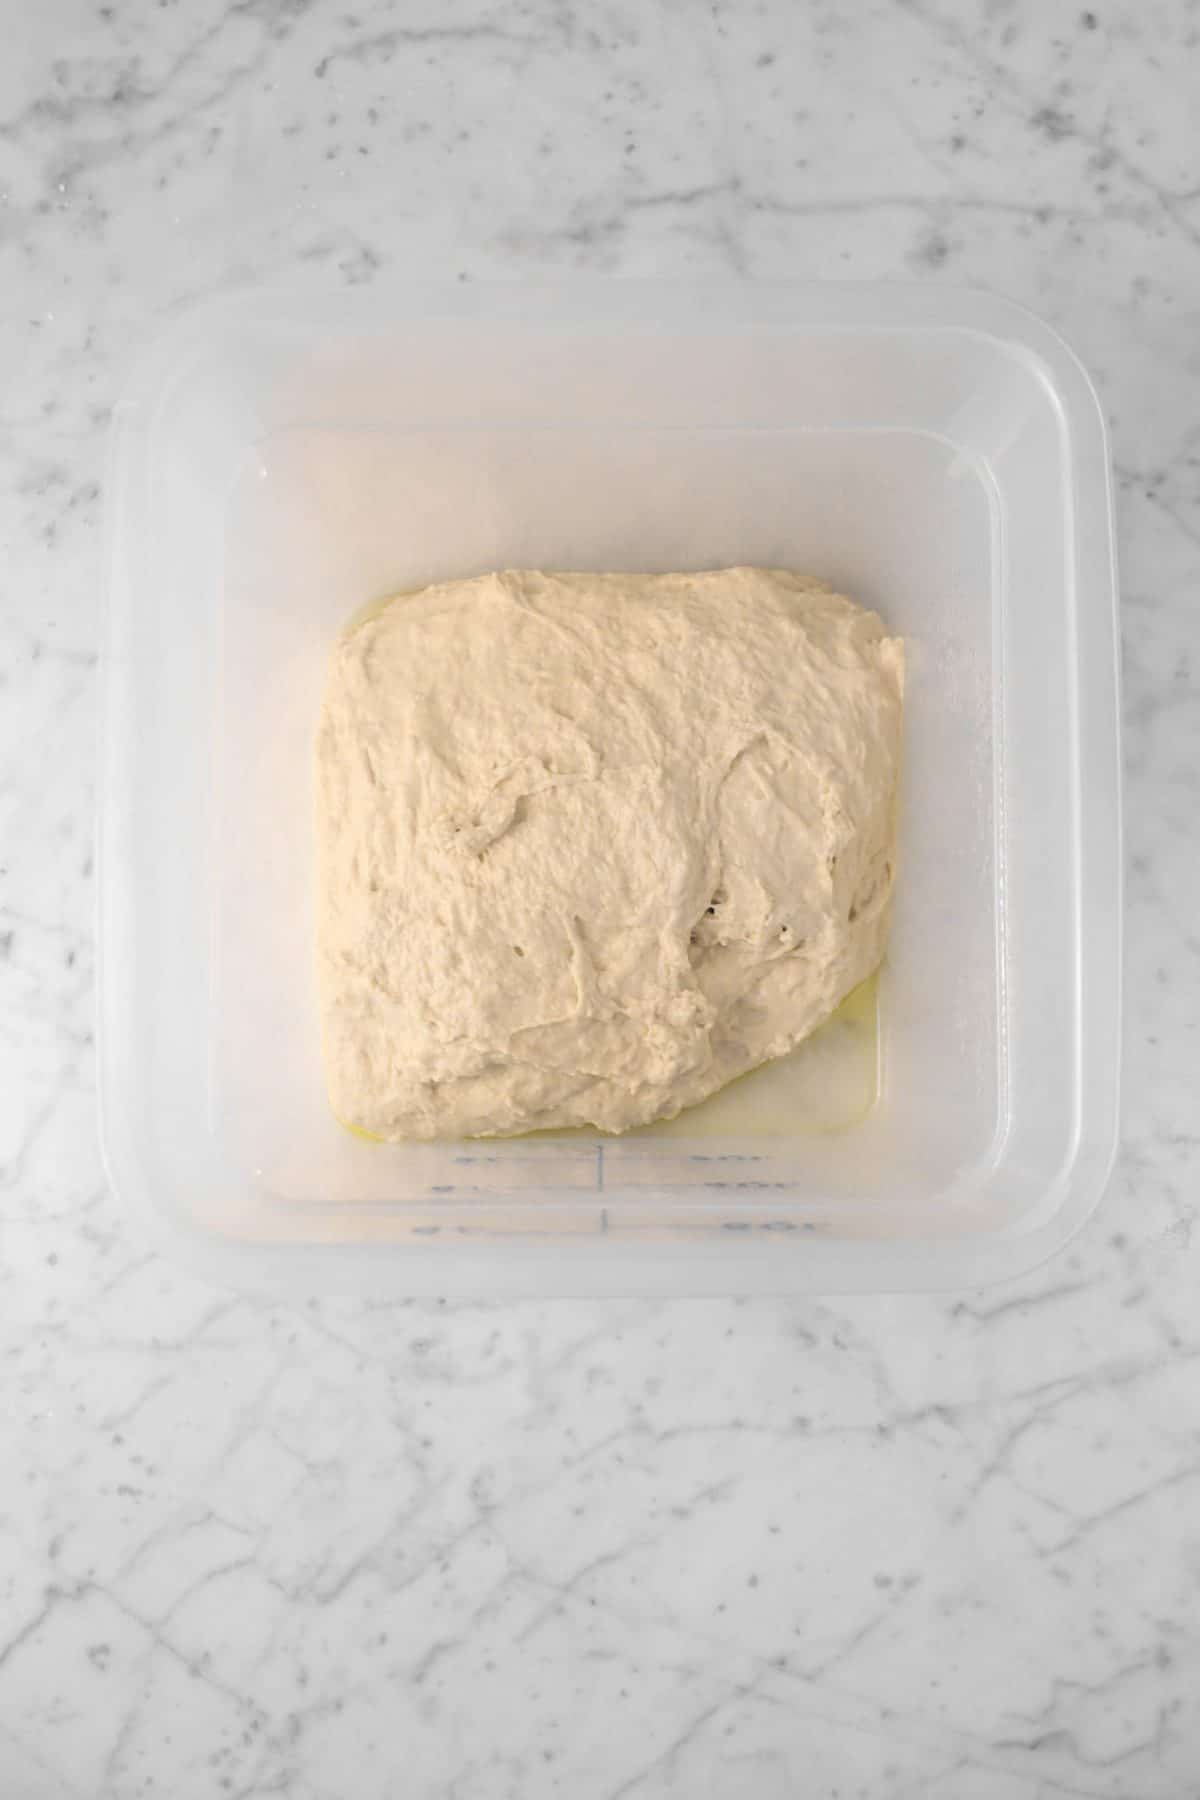 dough added to plastic dough rising bucket